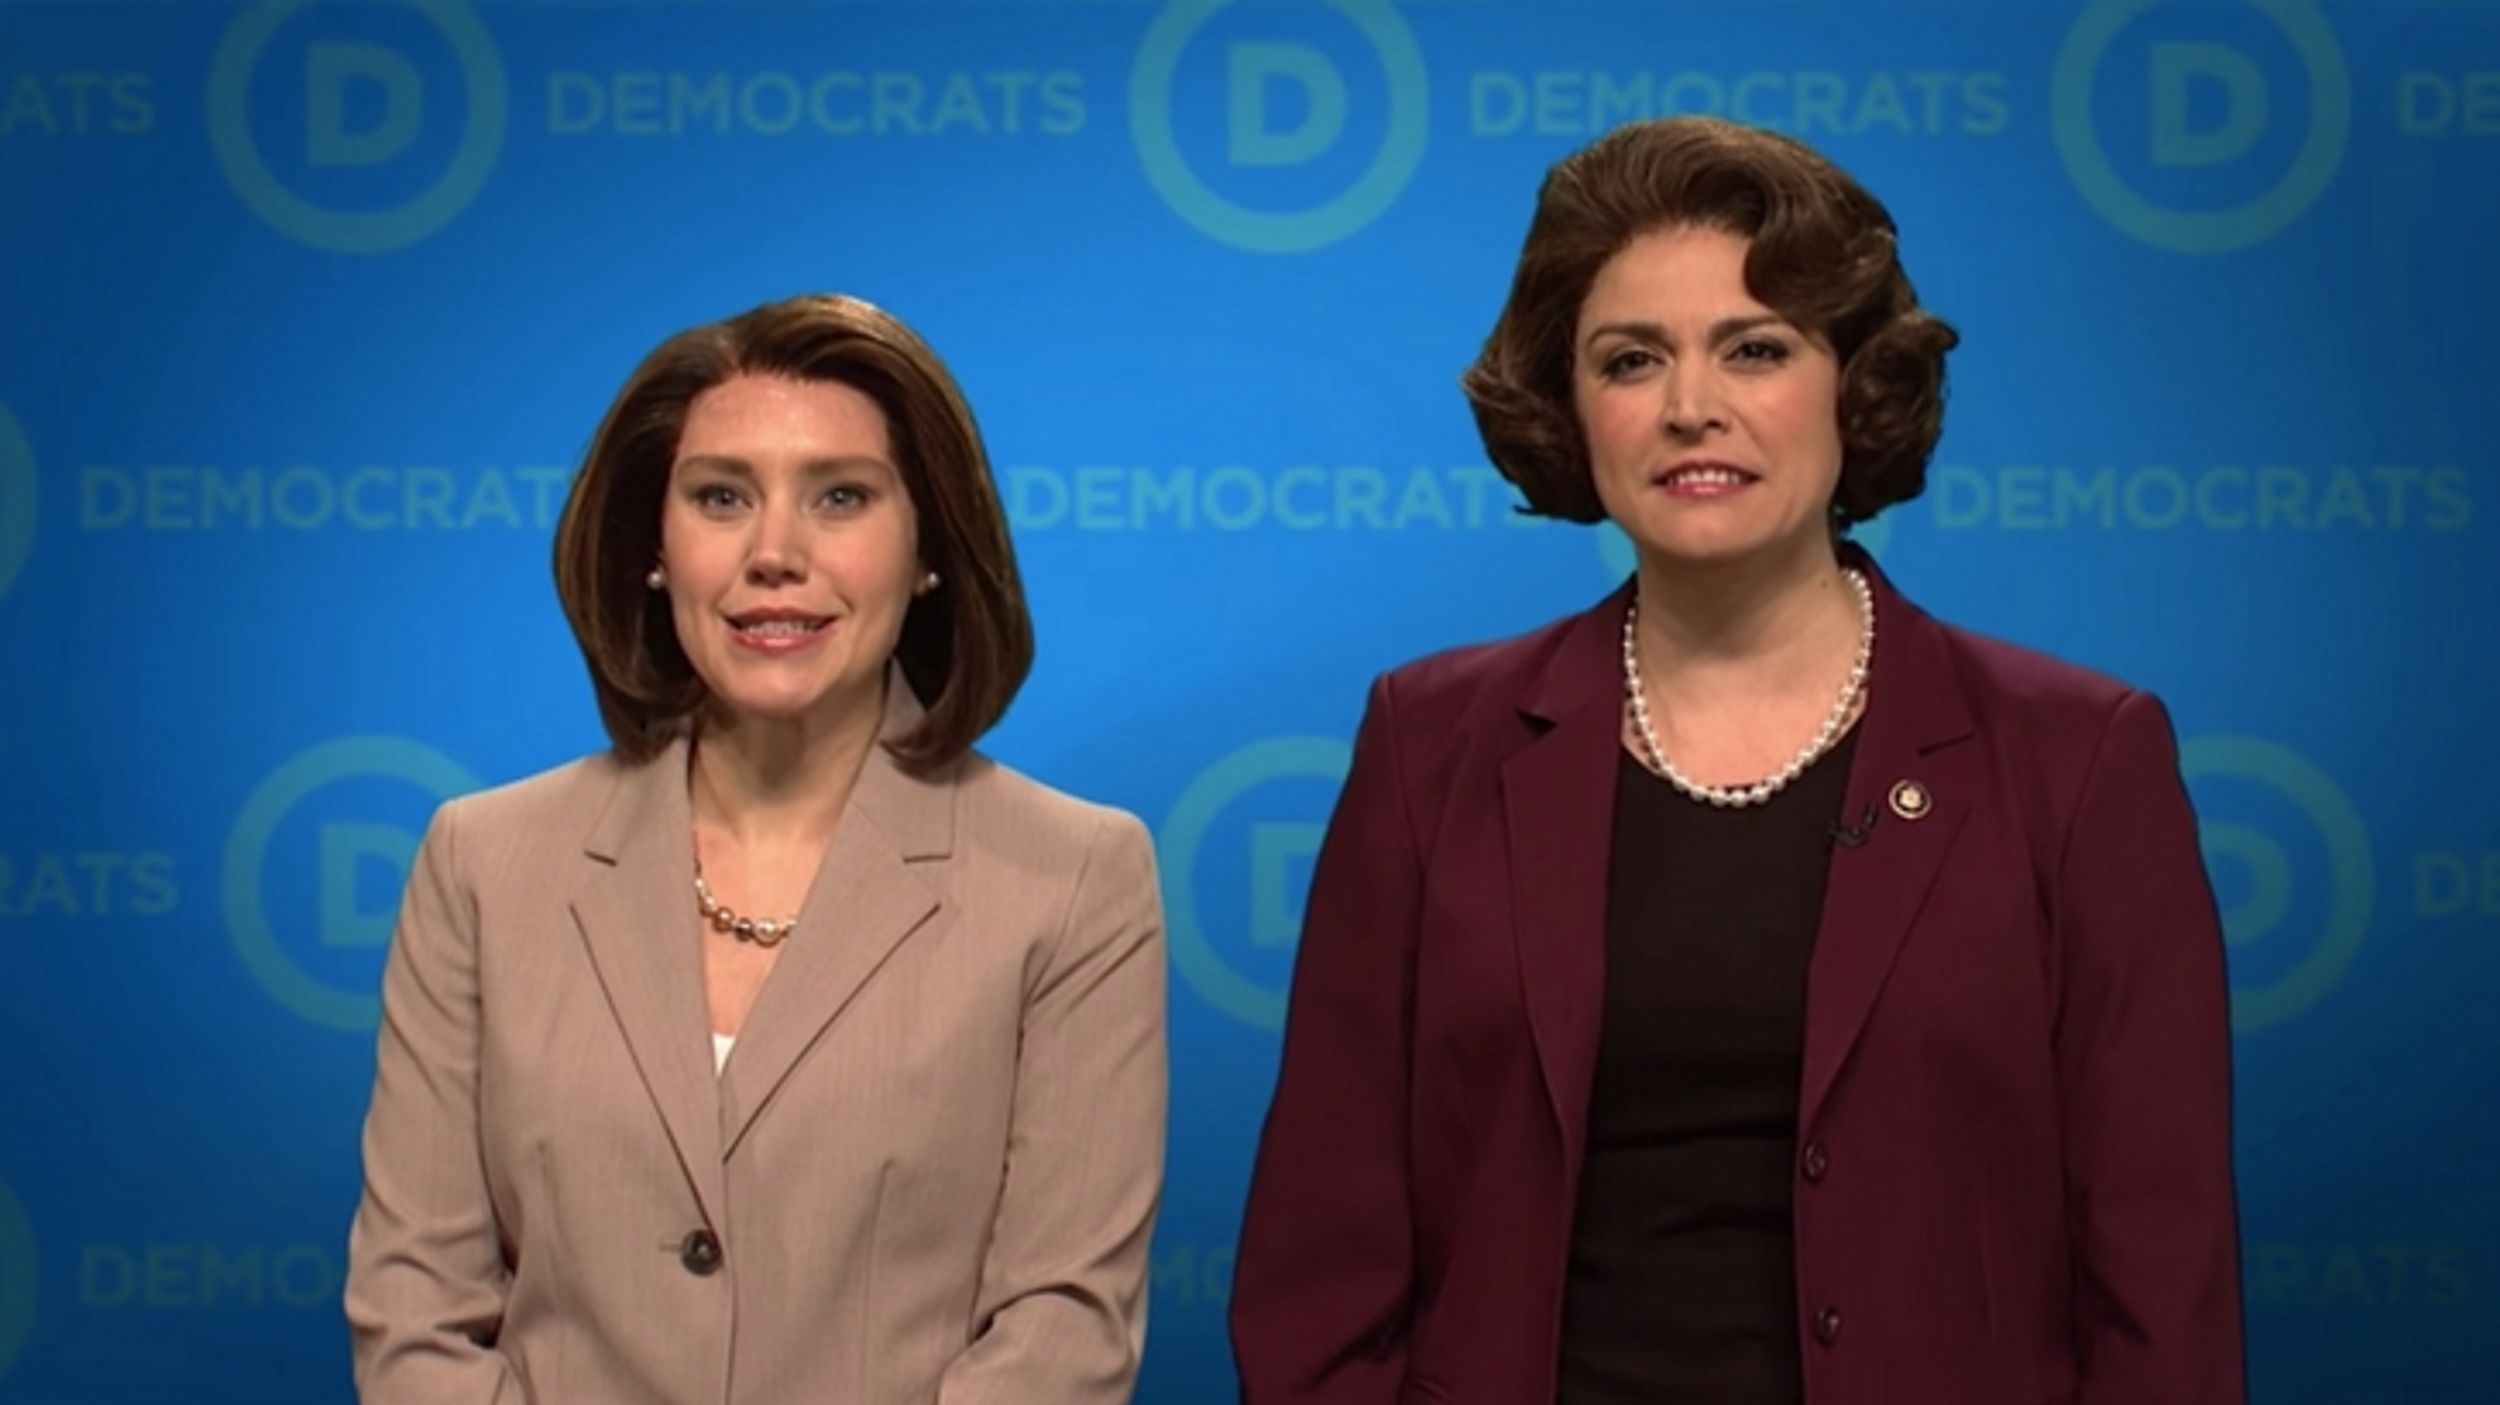 WATCH: 'Saturday Night Live' Makes Fun of Boring Democrats